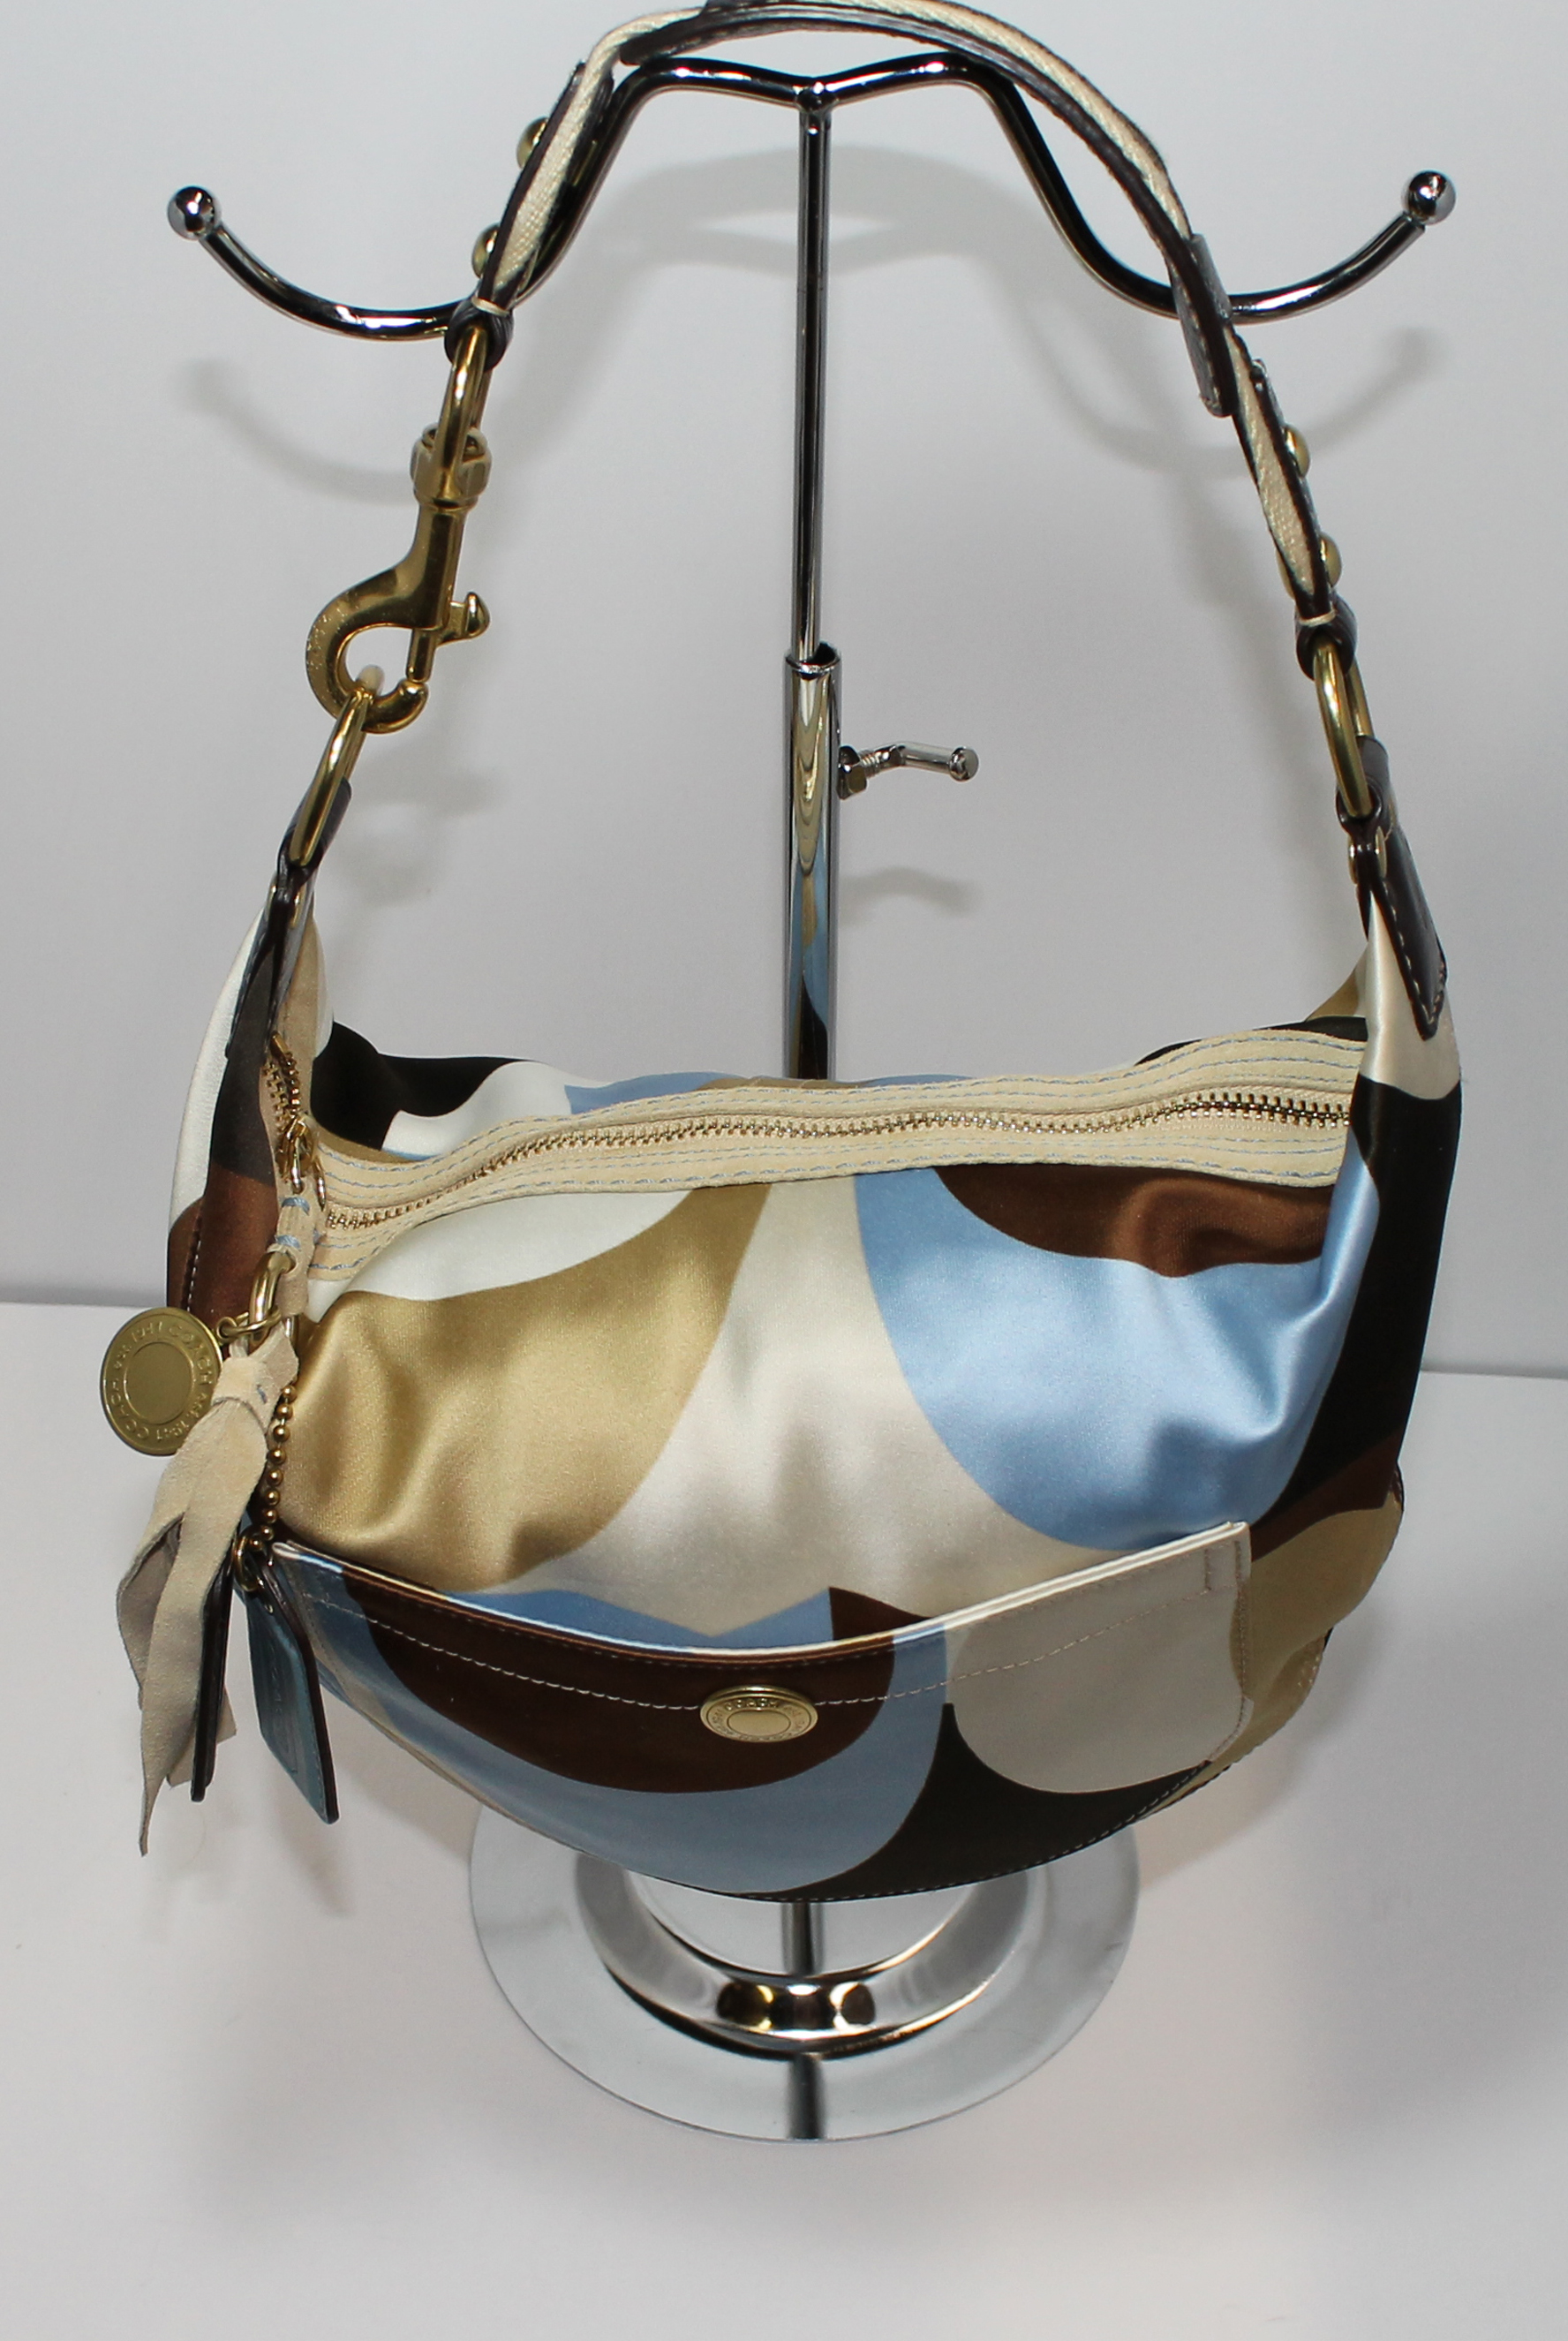 Coach Multi Colored Shoulder Bag 10105 Handbag (AP 1347 ) | eBay